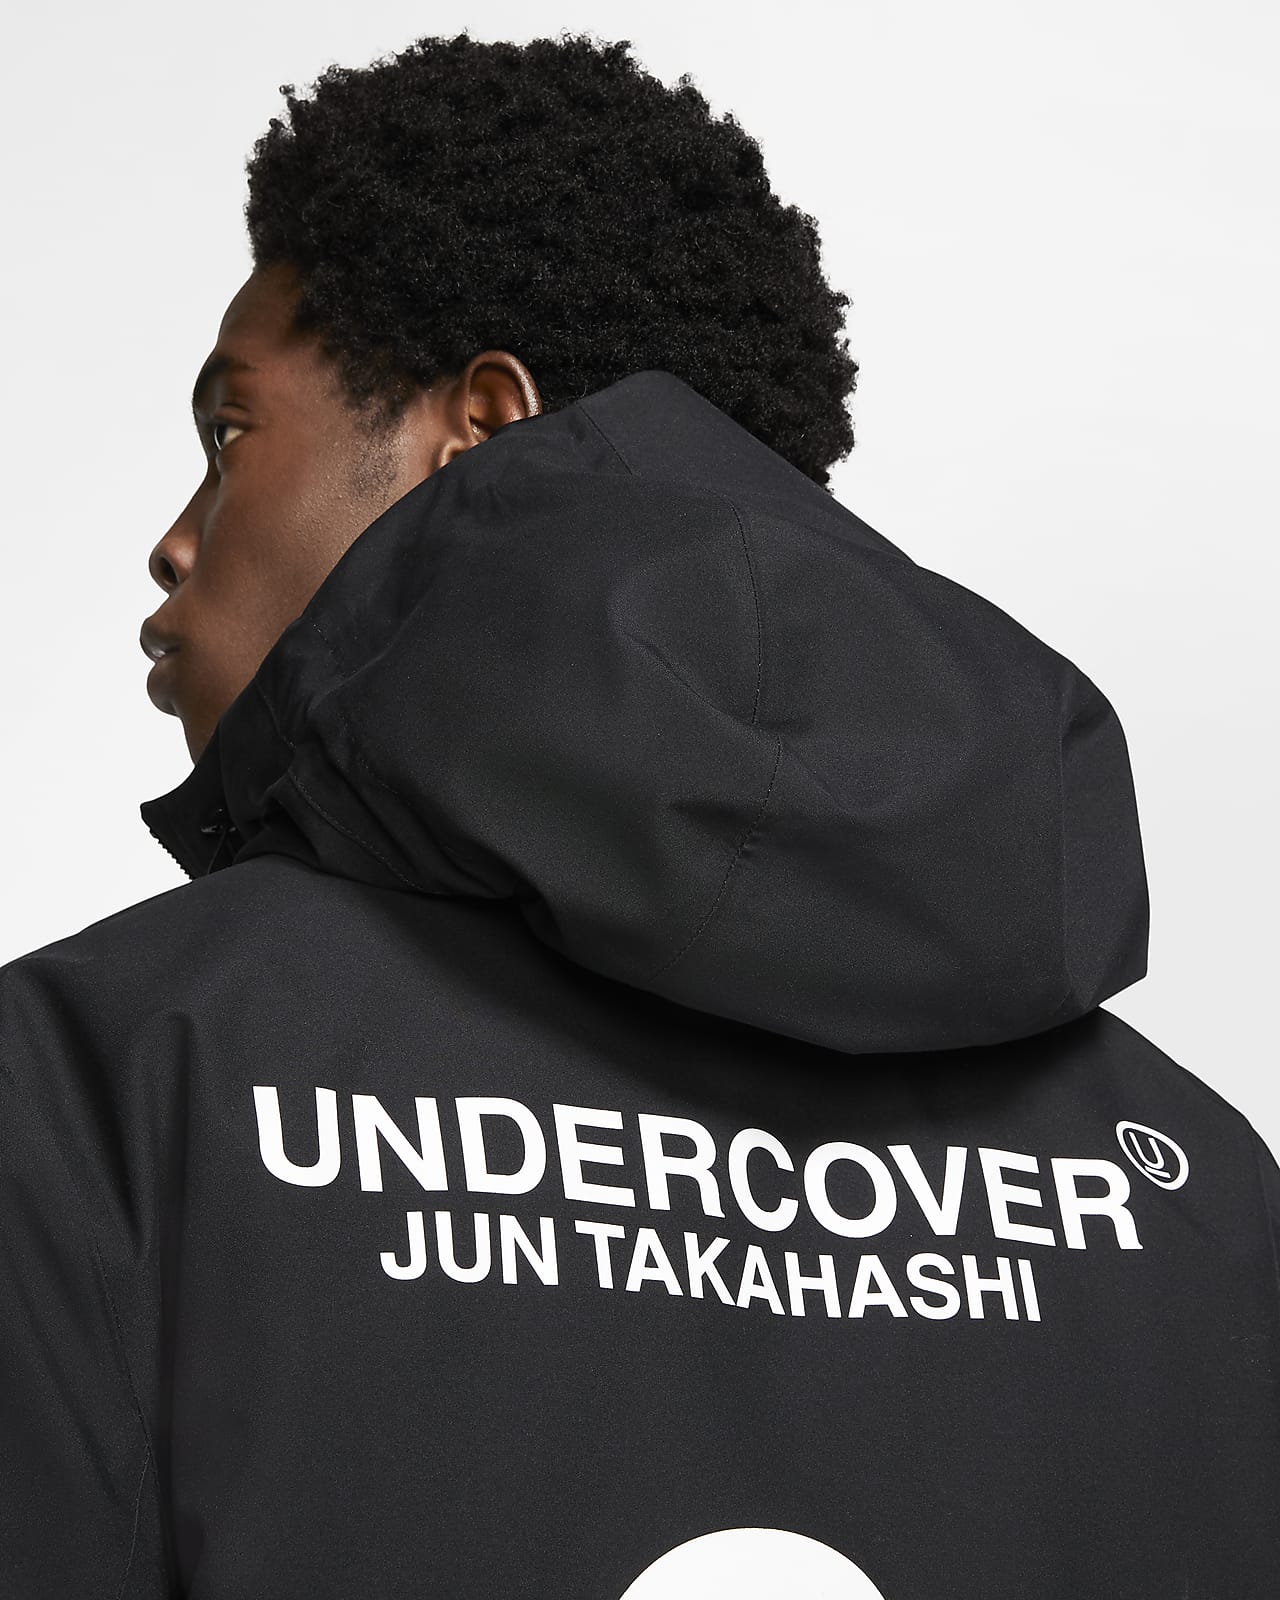 undercover jun takahashi nike jacket